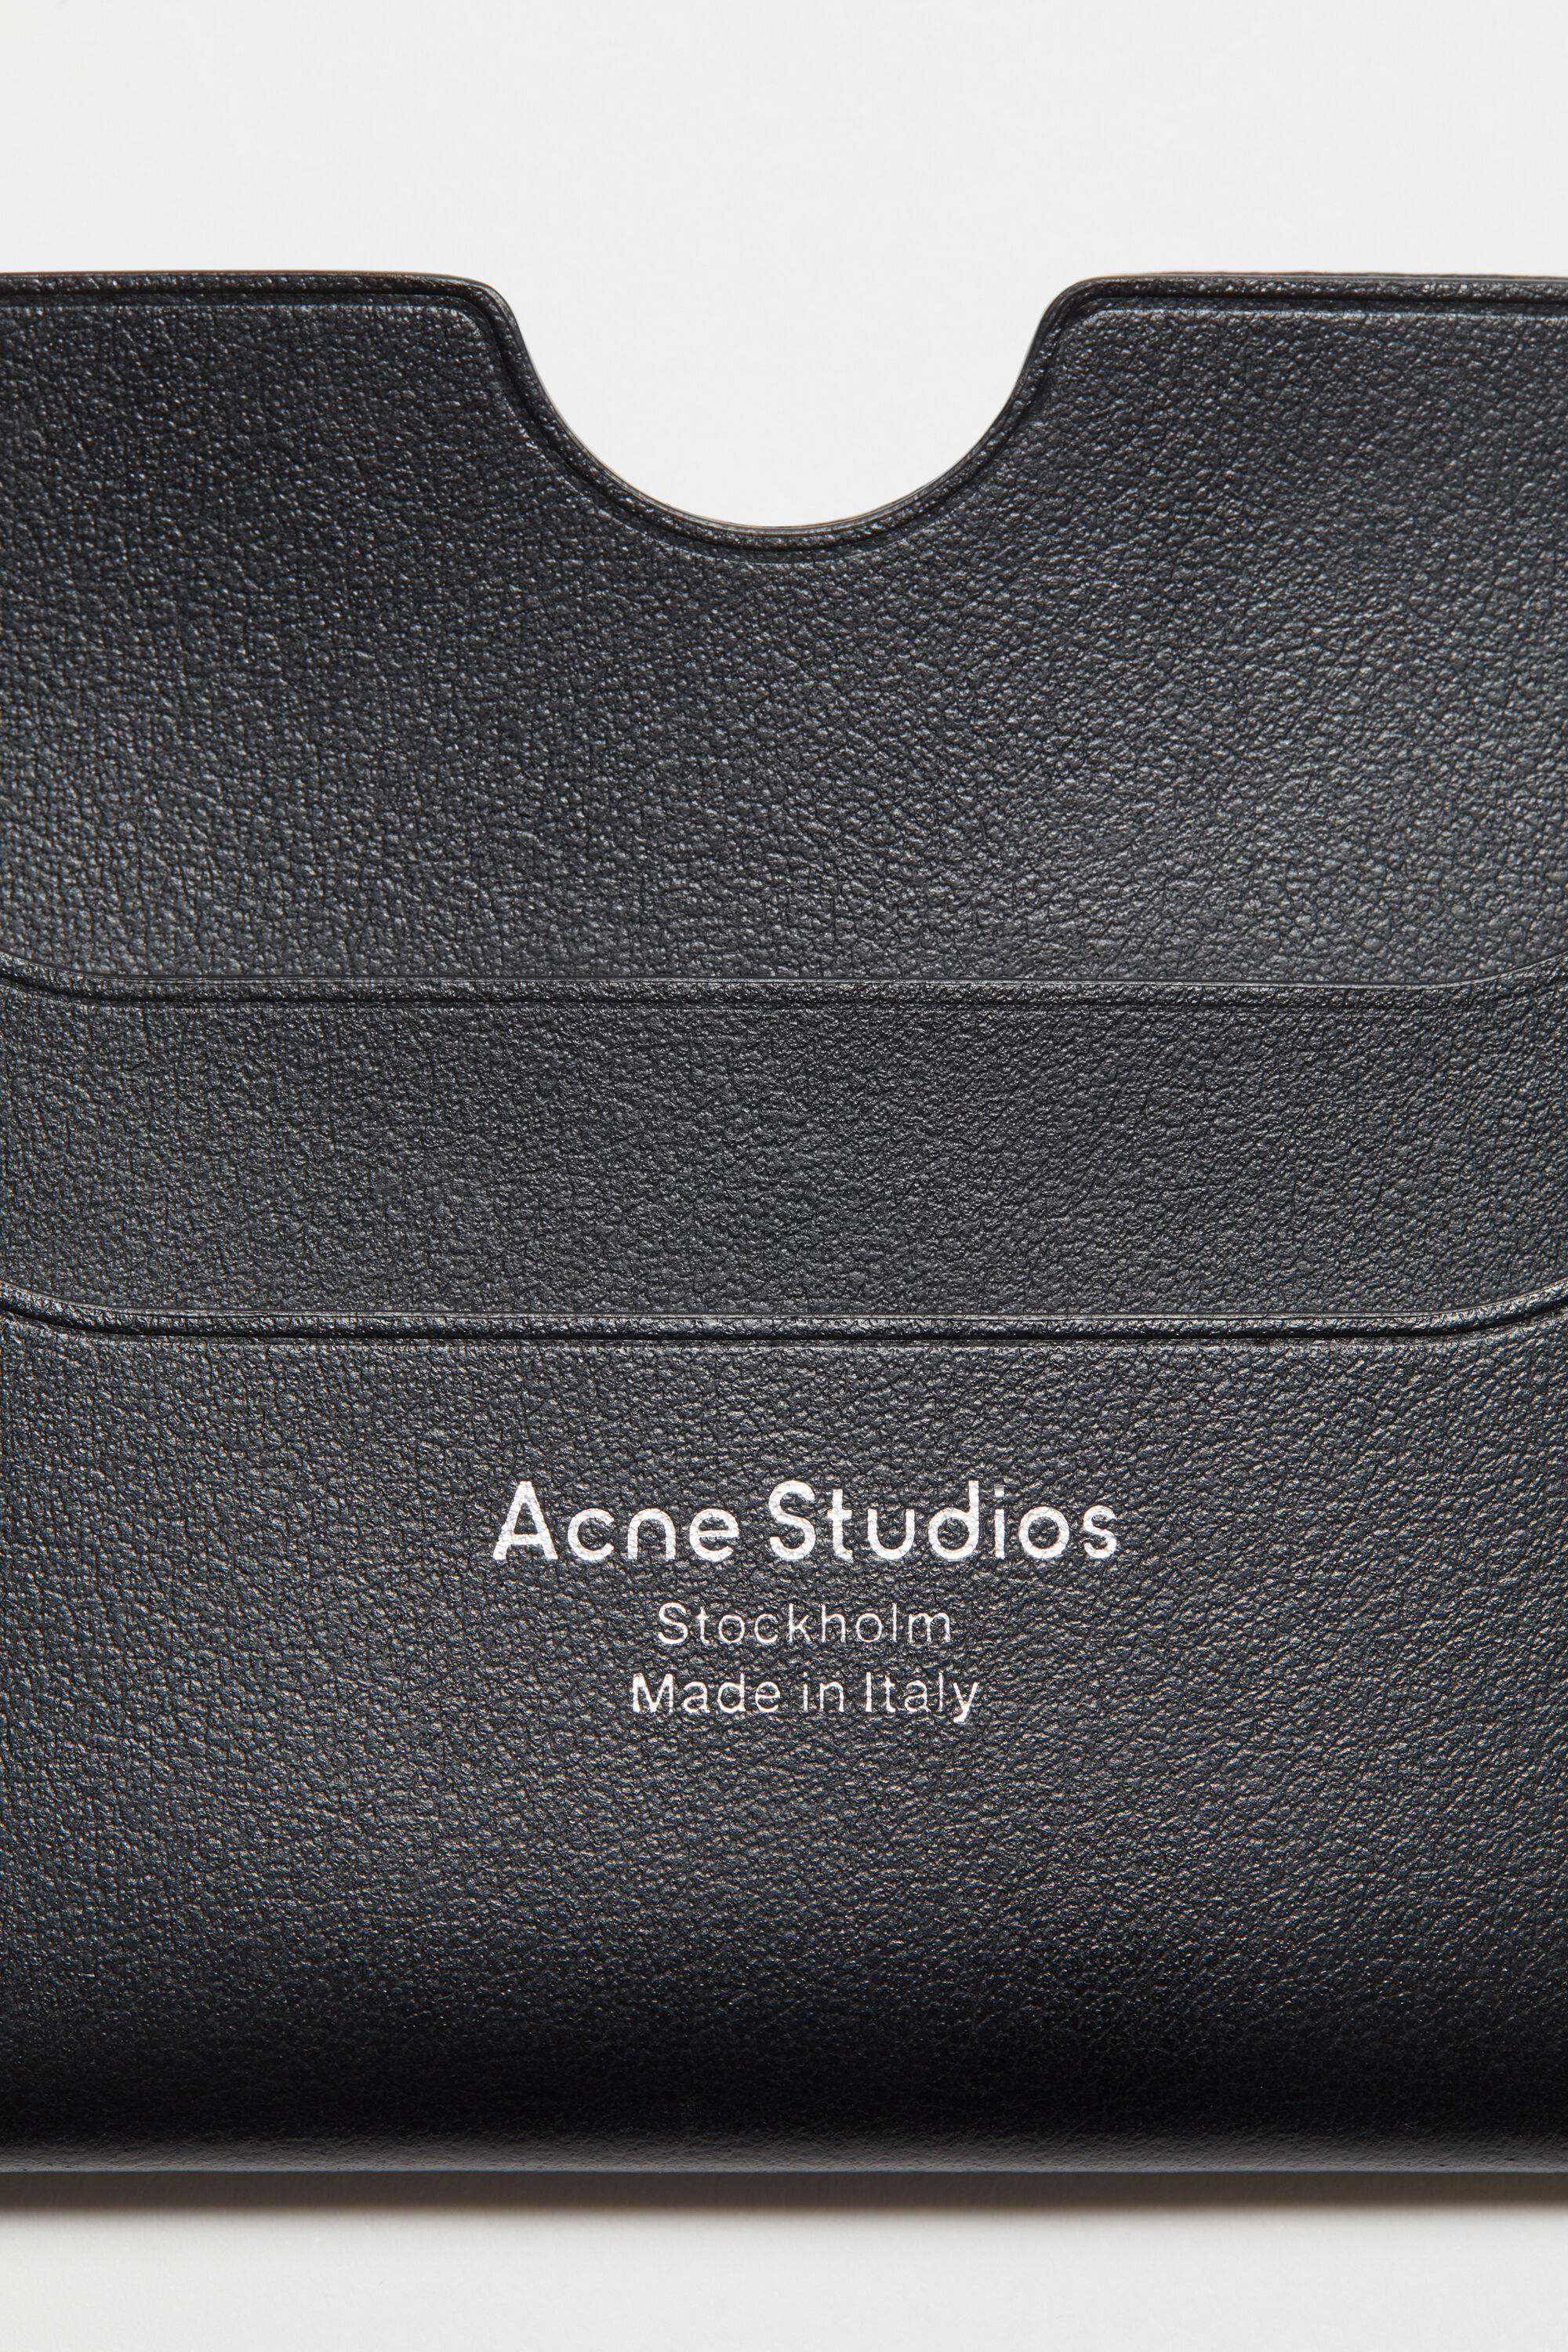 Acne Studios - Leather card holder - Black